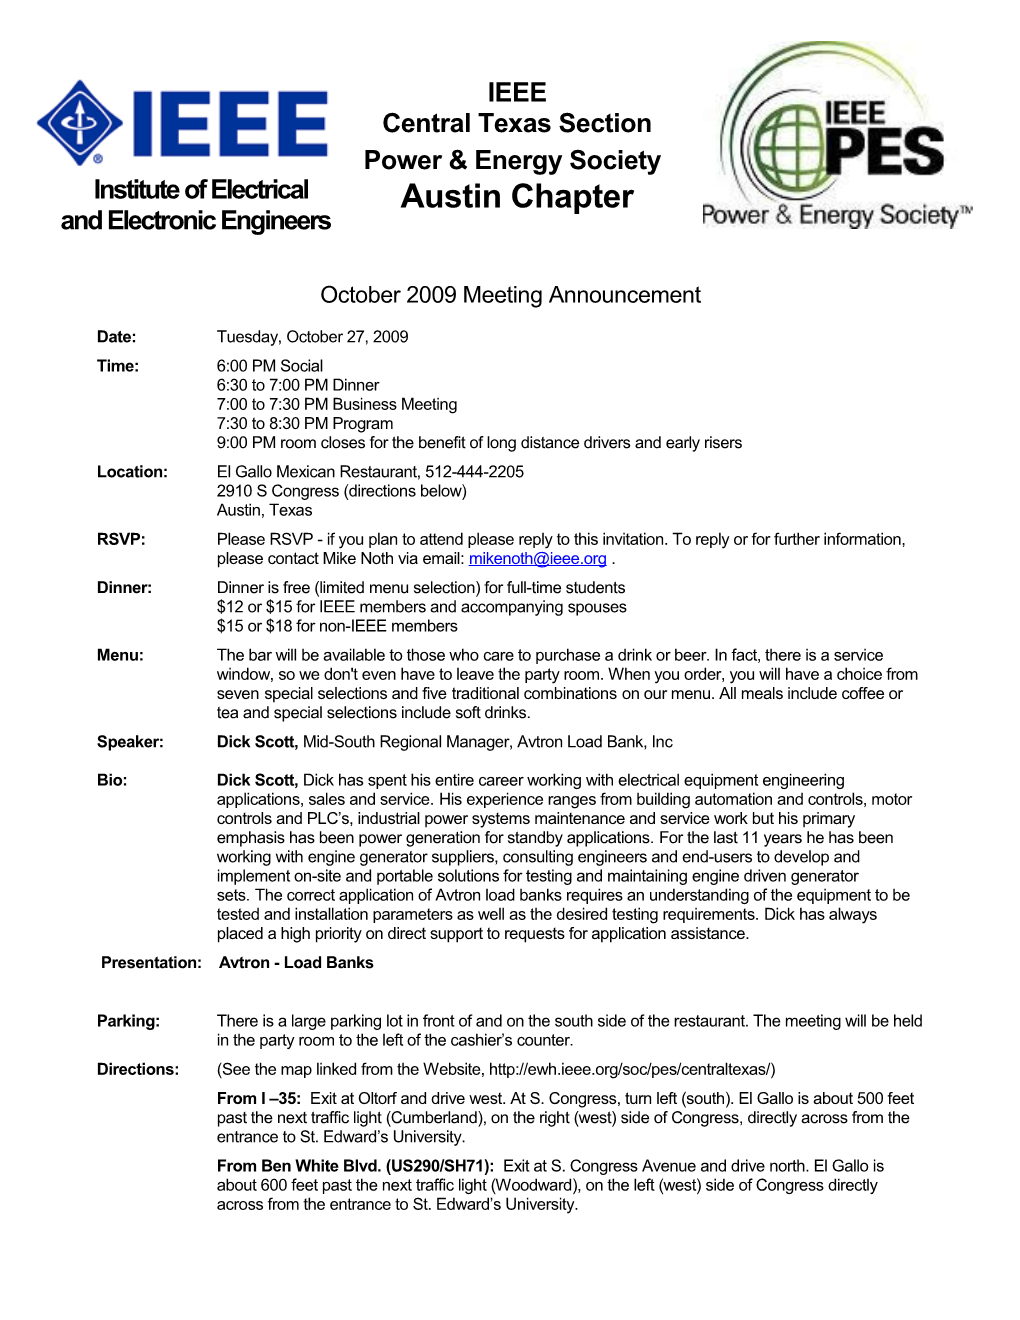 IEEE PES San Antonio Meeting Announcement s1